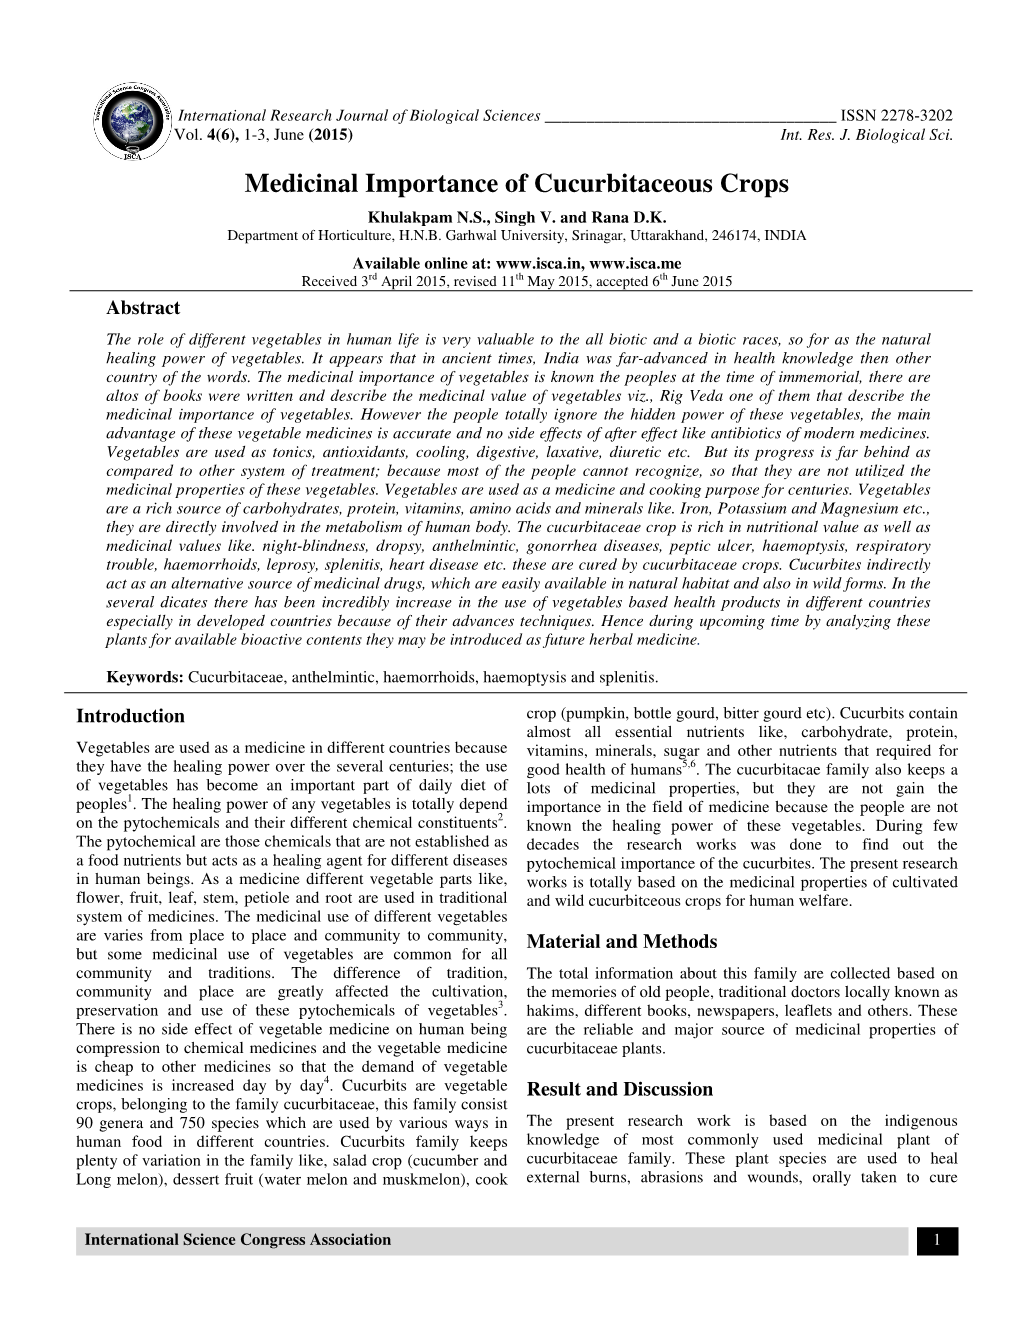 Medicinal Importance of Cucurbitaceous Crops